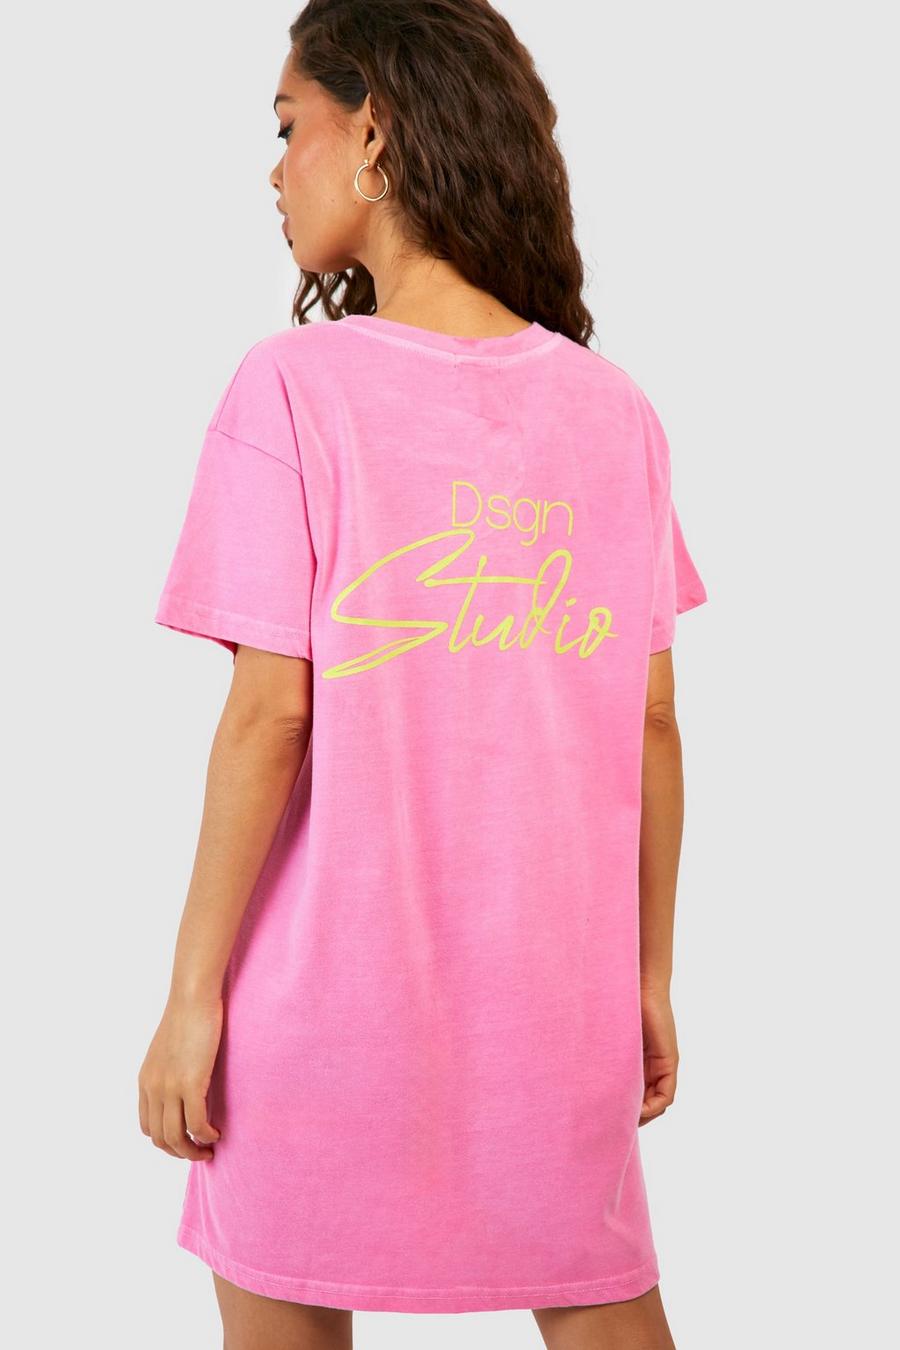 Oversize T-Shirt-Kleid mit Design Studio Print, Hot pink